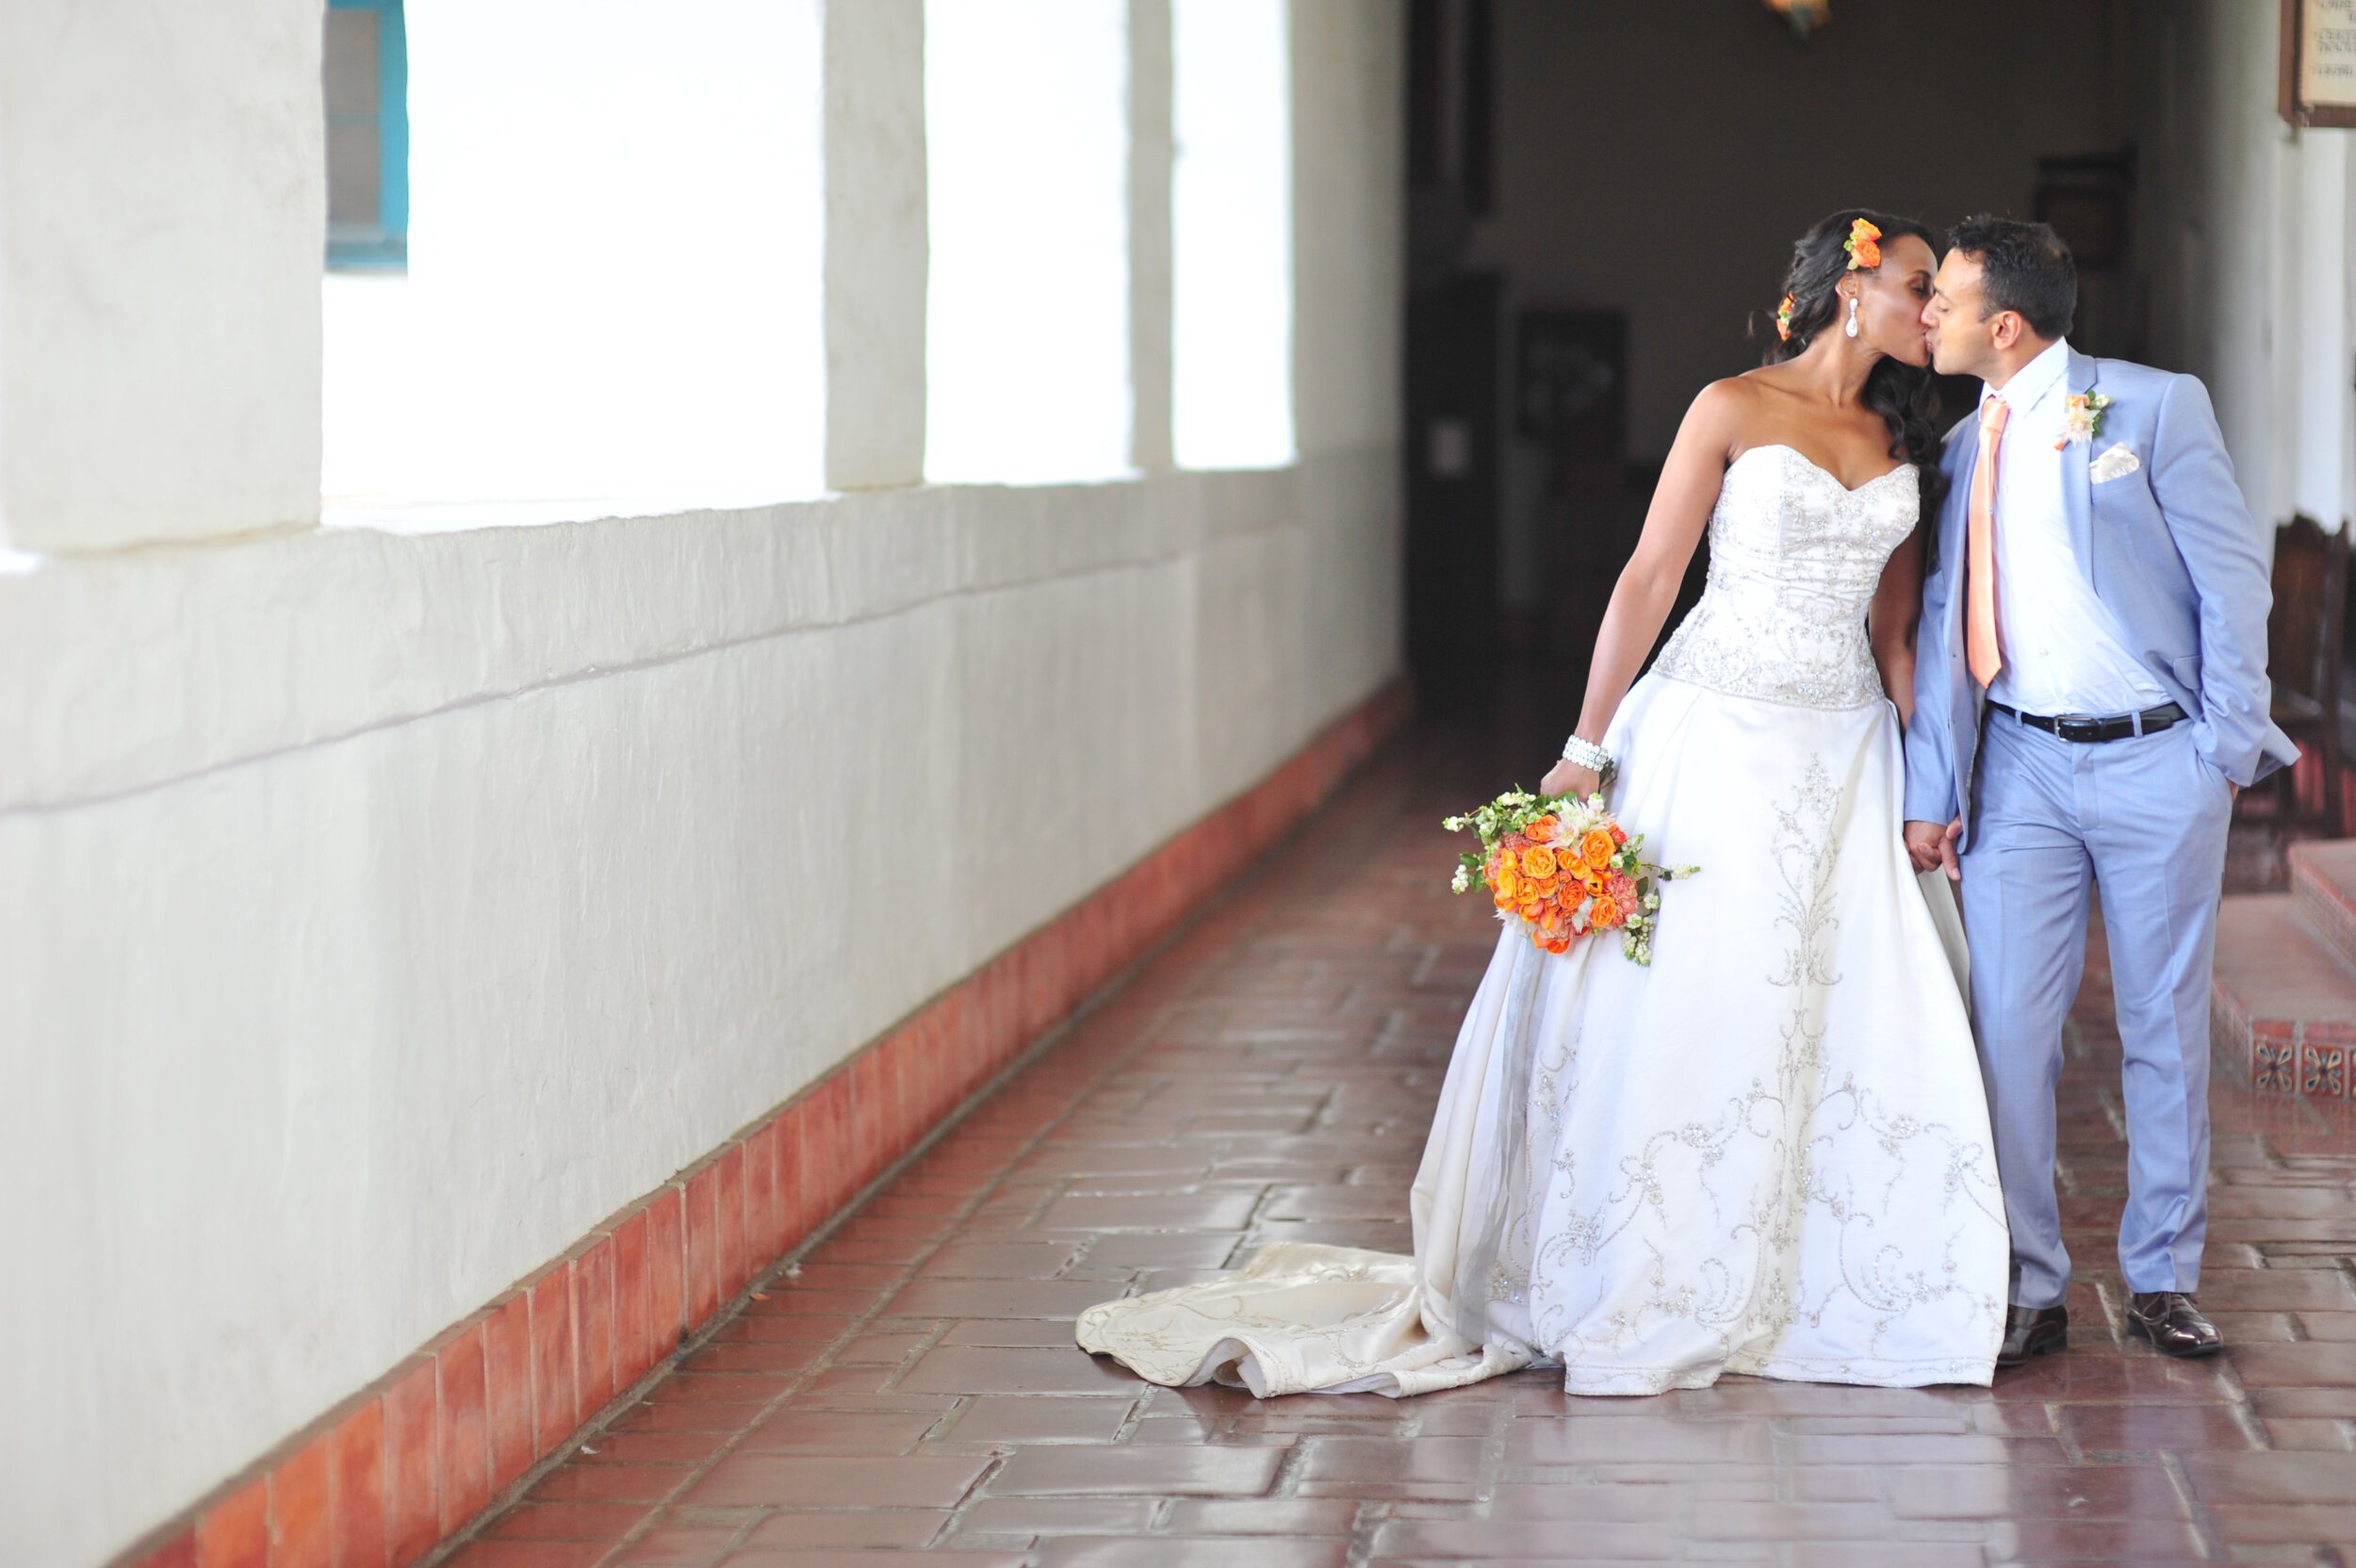 www.santabarbarawedding.com | ByCherry Photography | Dalina Klan | Four Seasons Resort The Biltmore | Cheryl Nacario | Bride and Groom Kiss in the Hallway